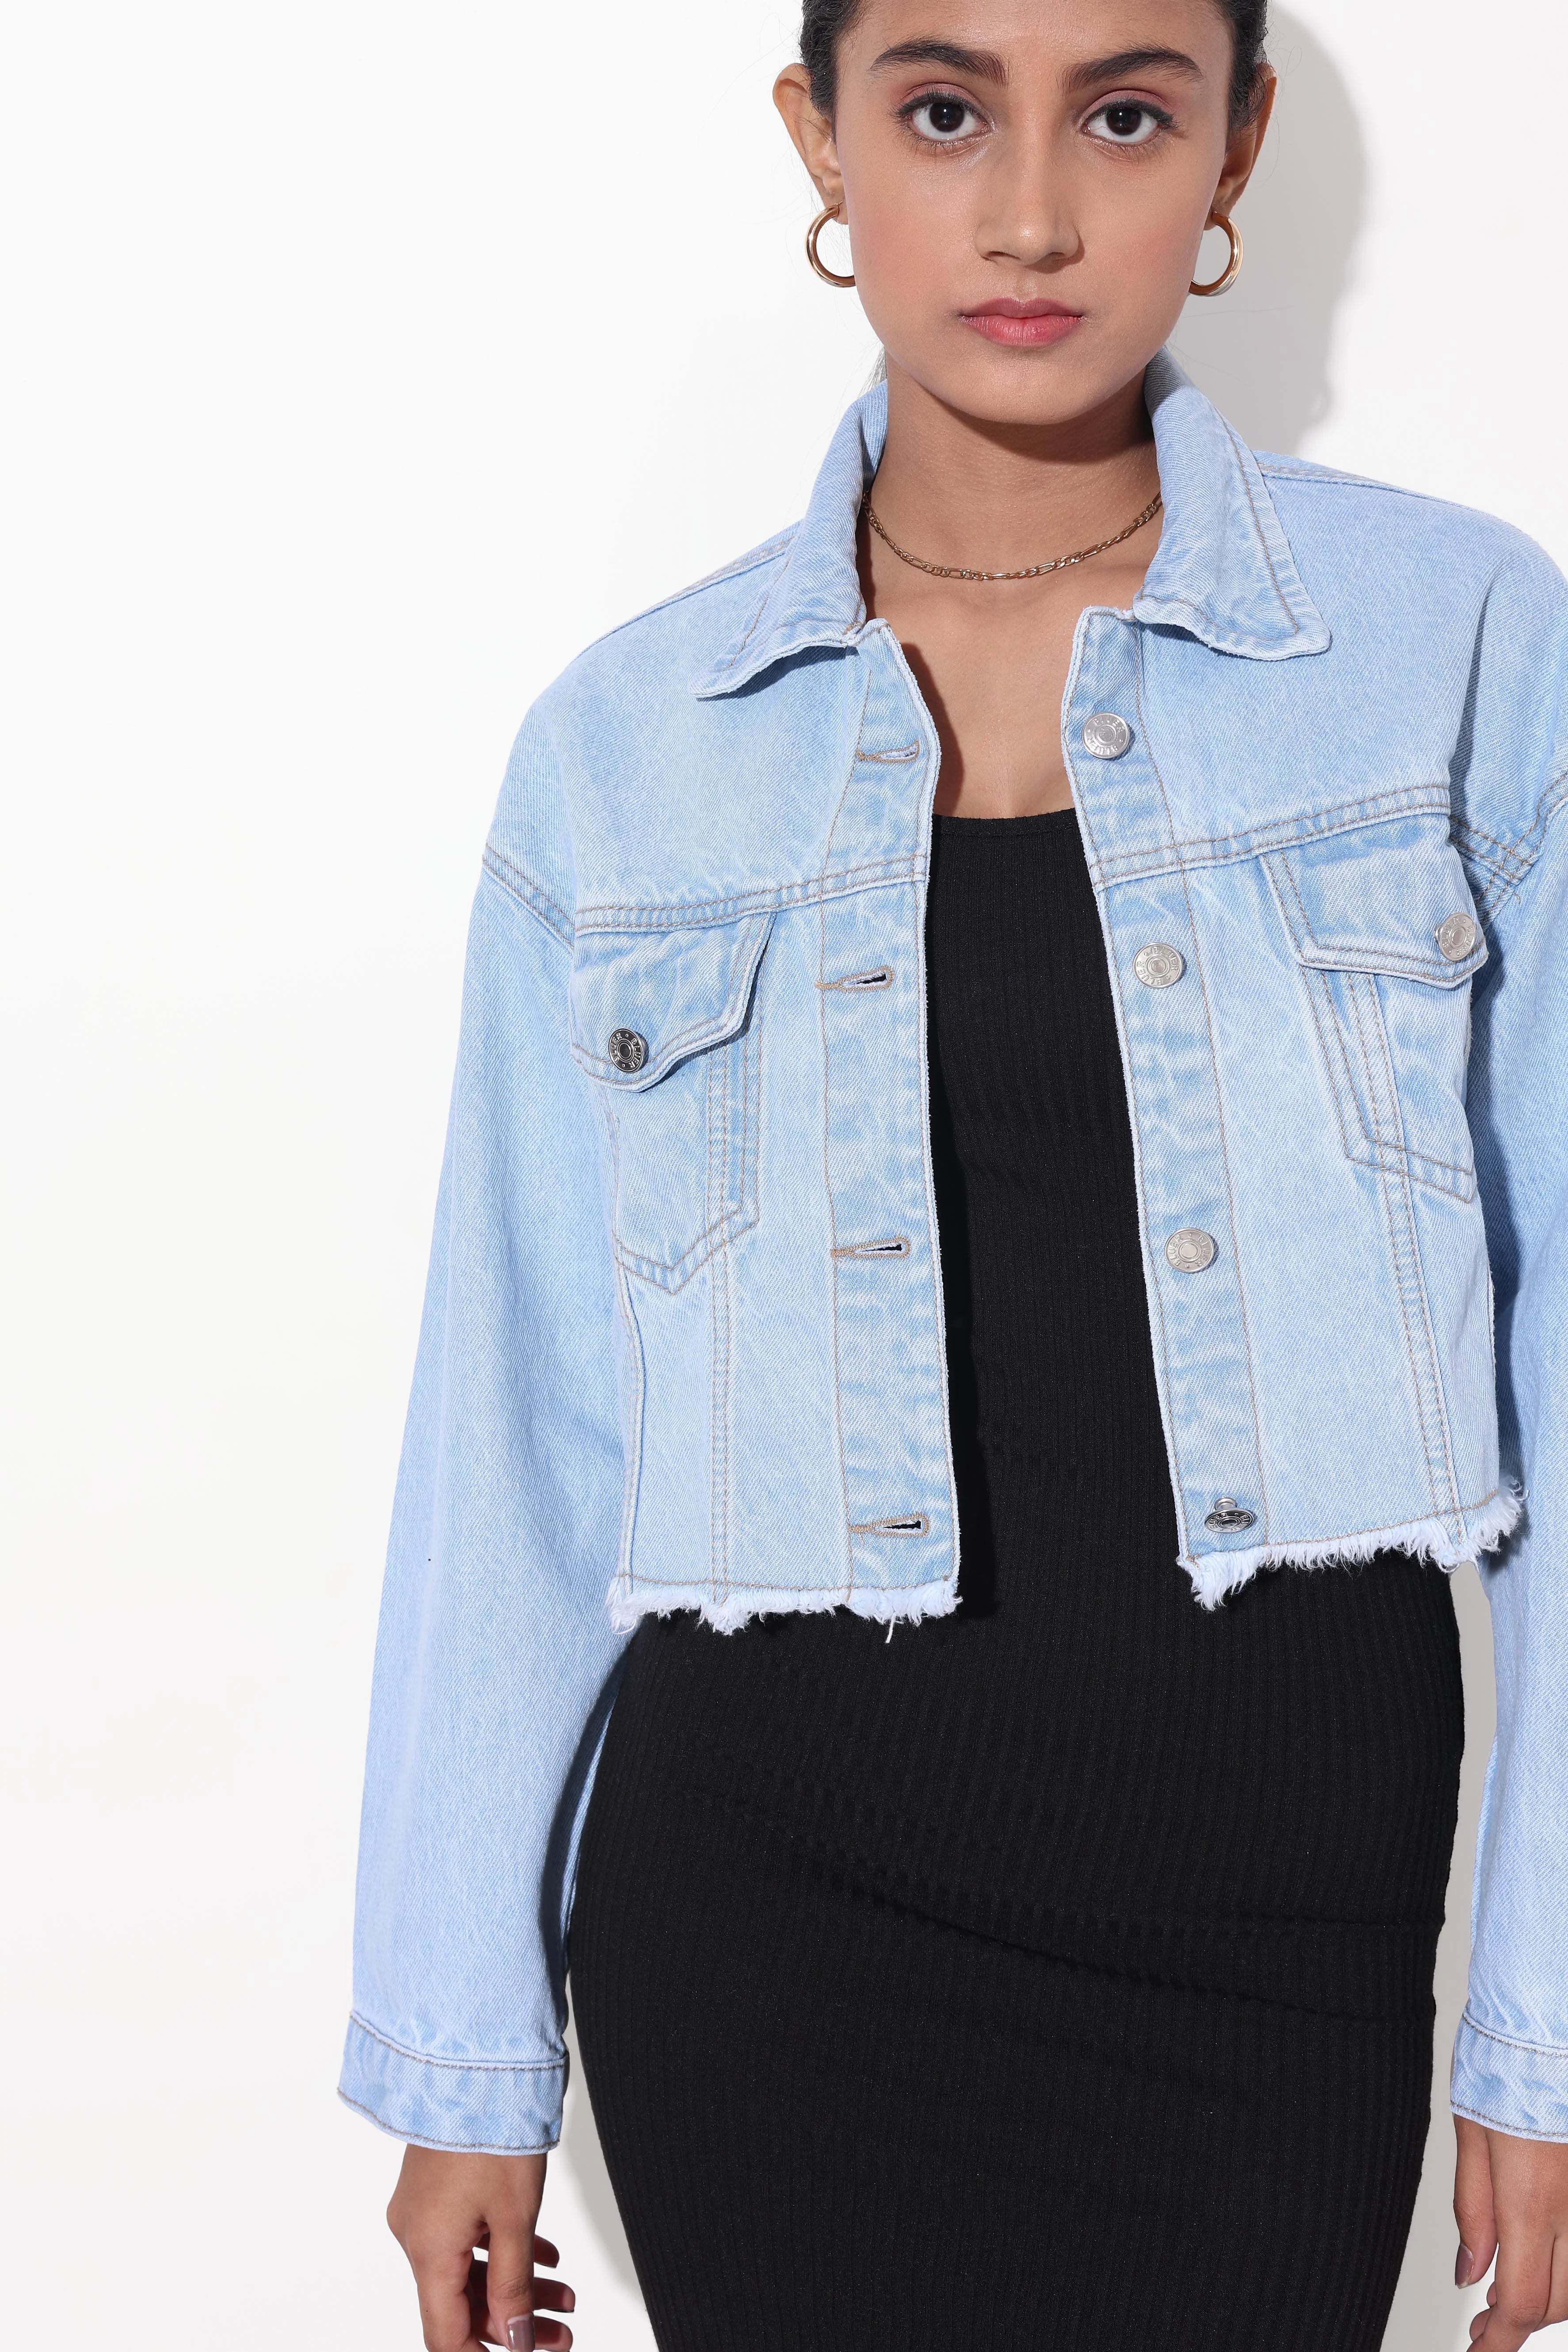 Buy Levi's Blue Denim Jacket for Women's Online @ Tata CLiQ